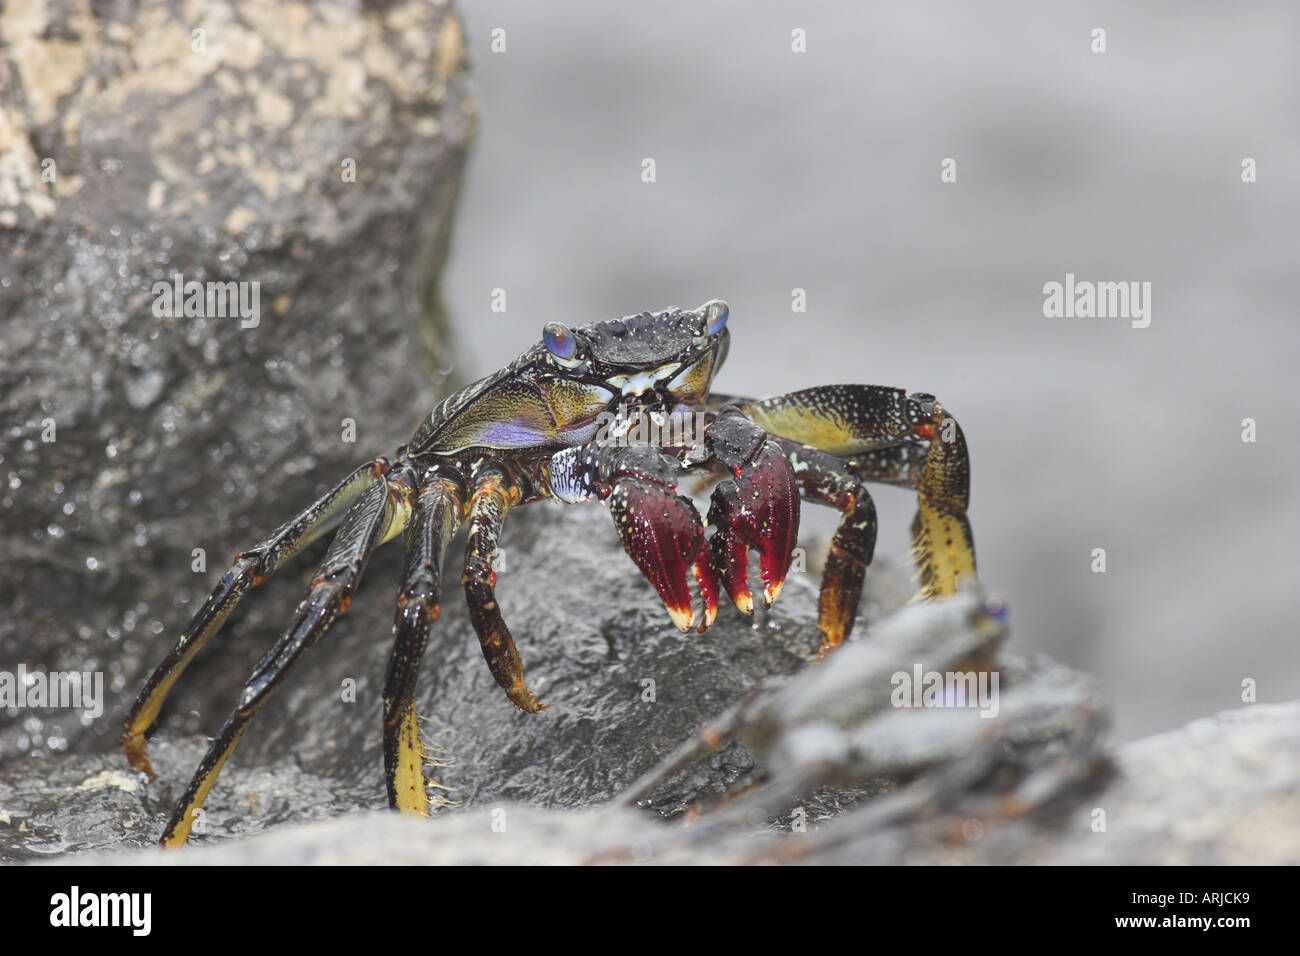 marbled shore crab, marbled rock crab (Pachygrapsus marmoratus), portrait, on a rock, Spain, Teneriffa Stock Photo